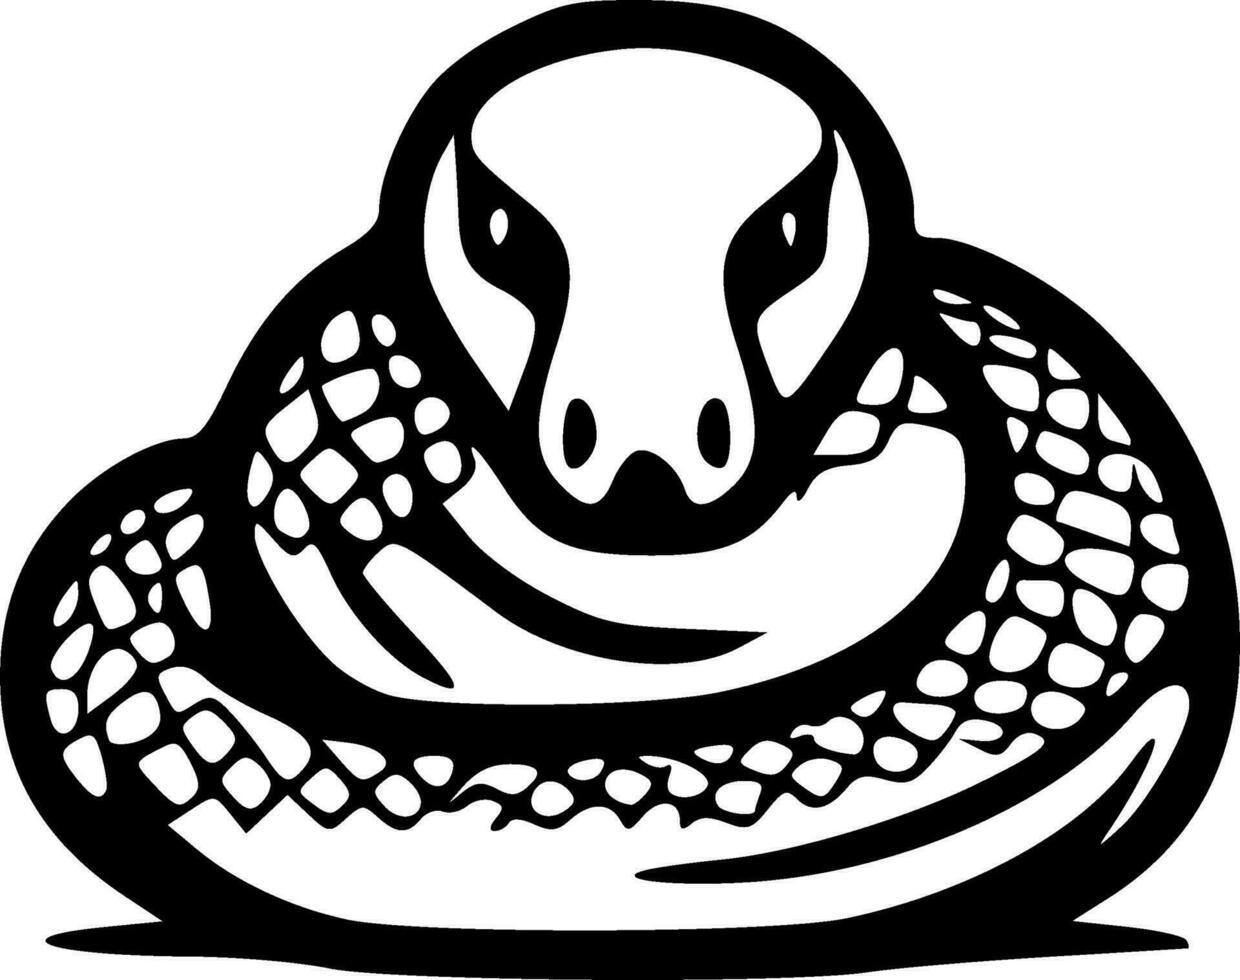 ringlad orm svart konturer svartvit vektor illustration